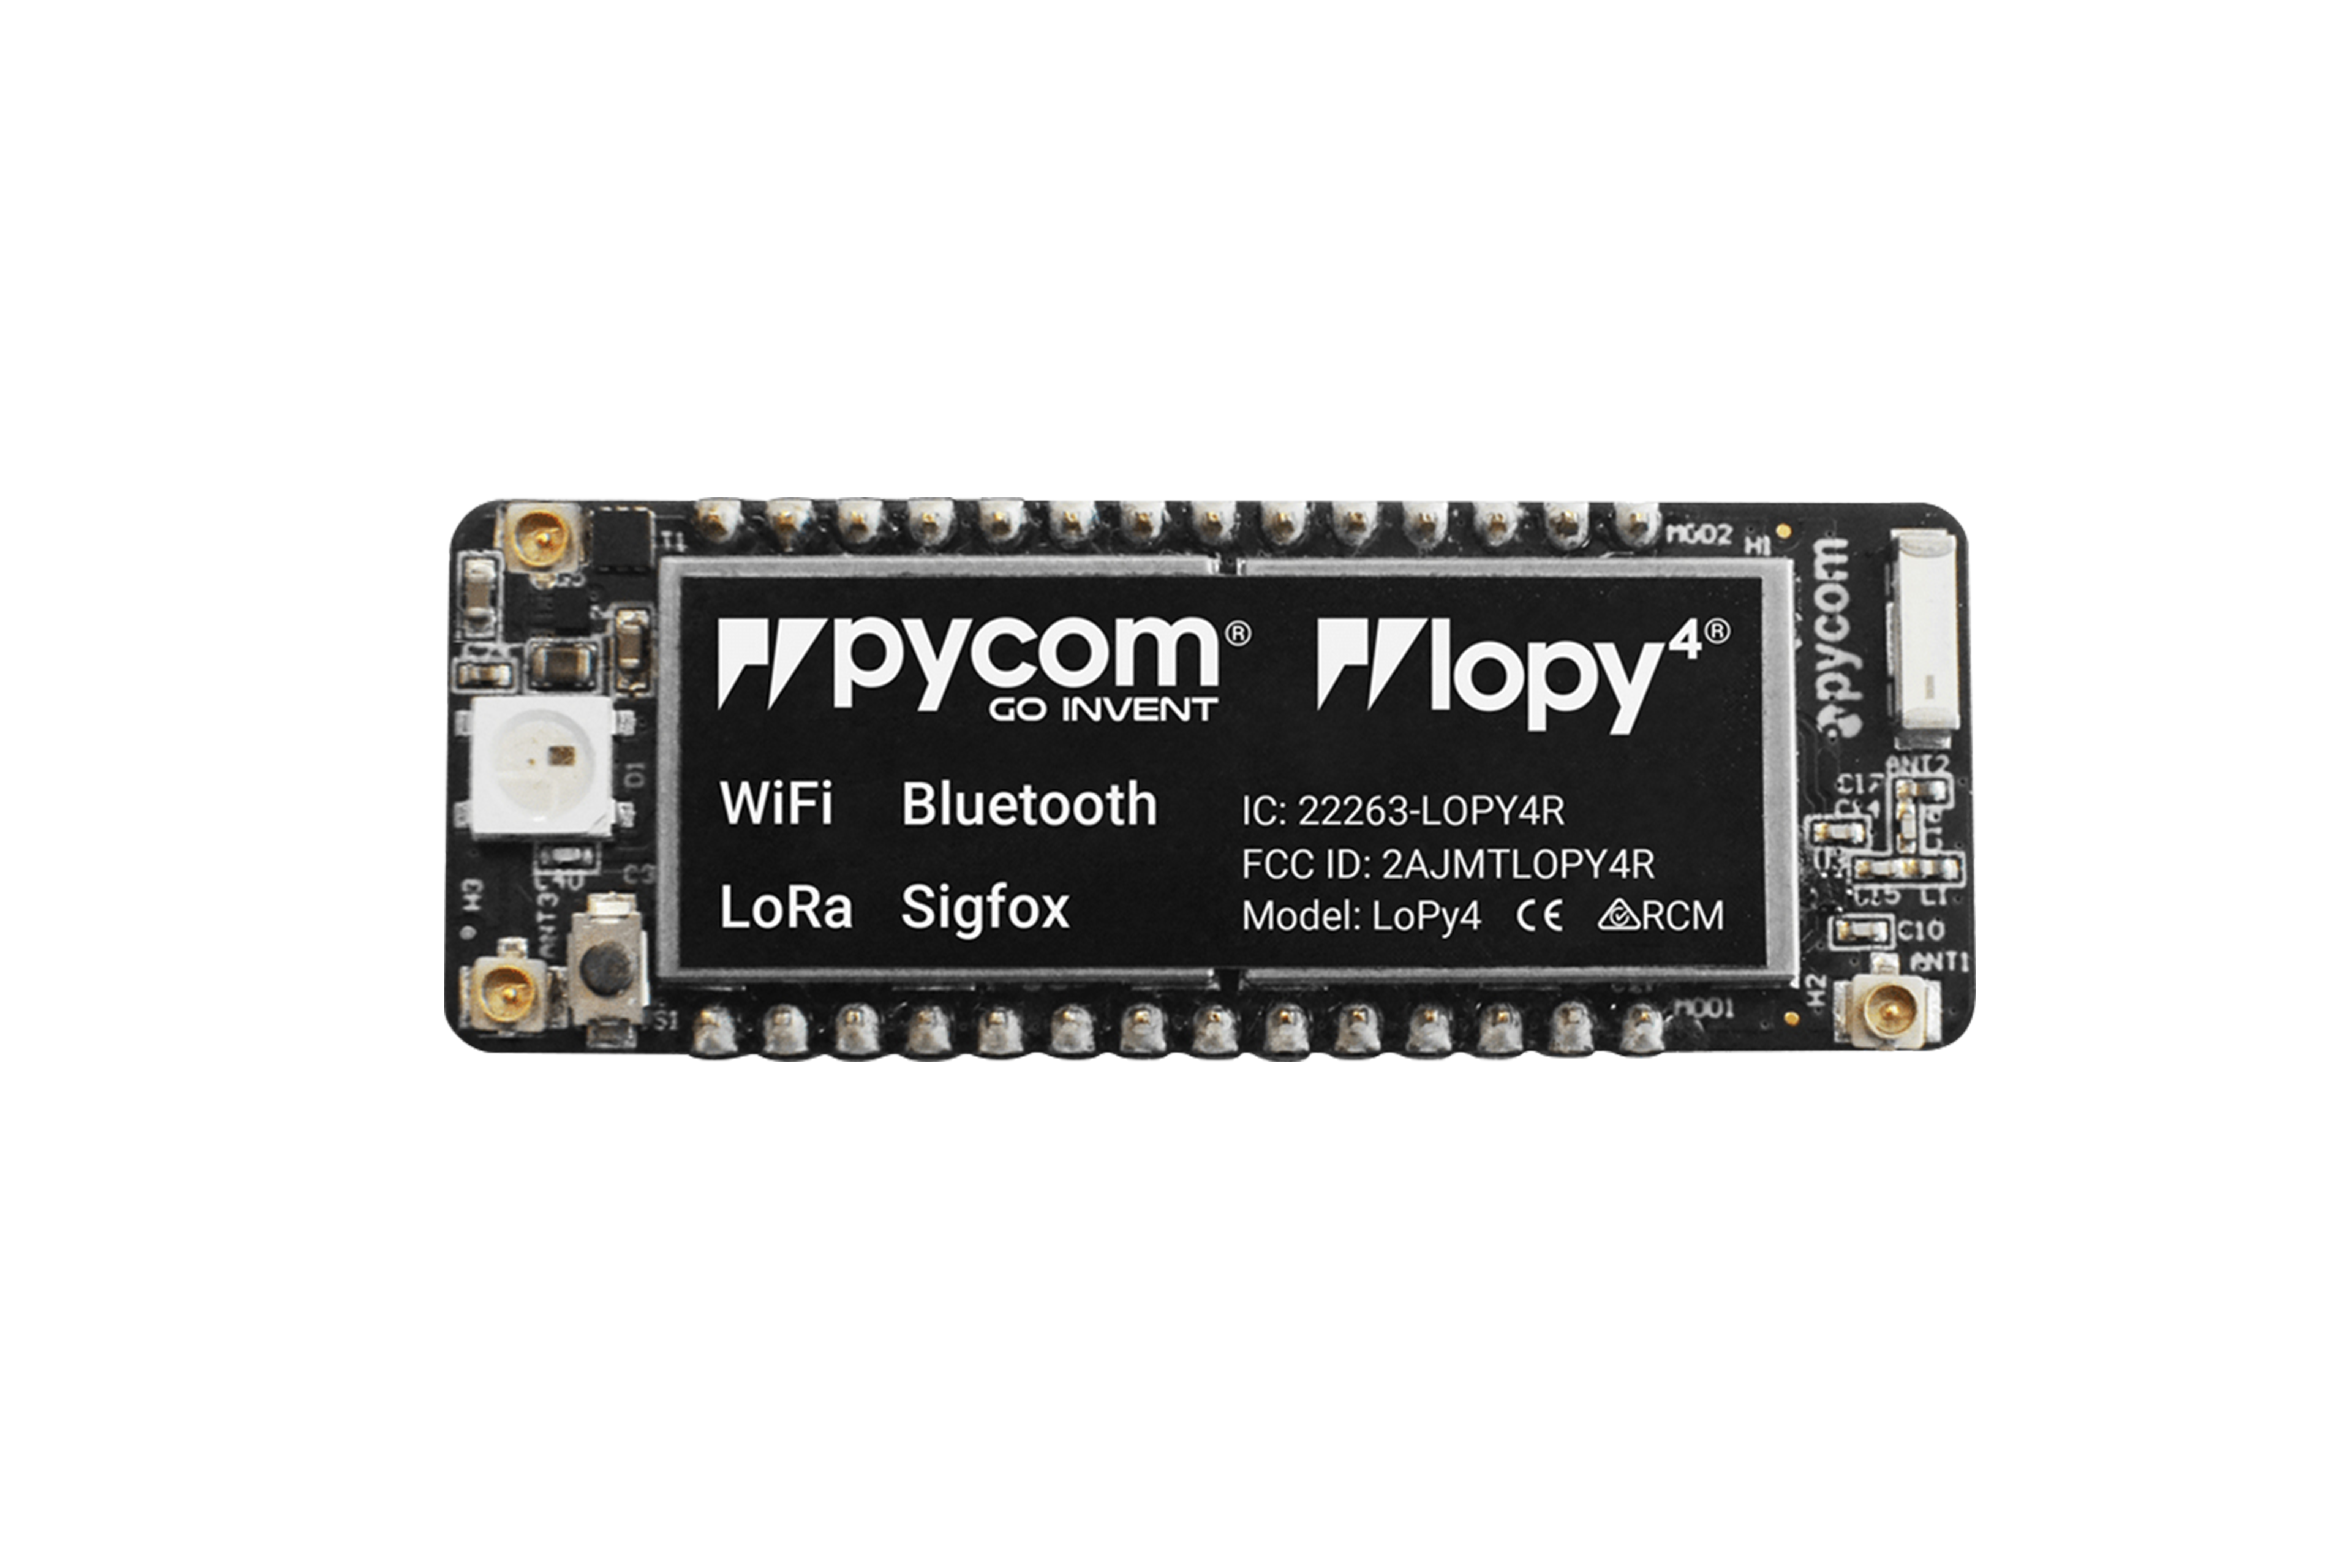 Pycom Lopy4 Development Board - (LoRa, Sigfox, WiFi And Ble)